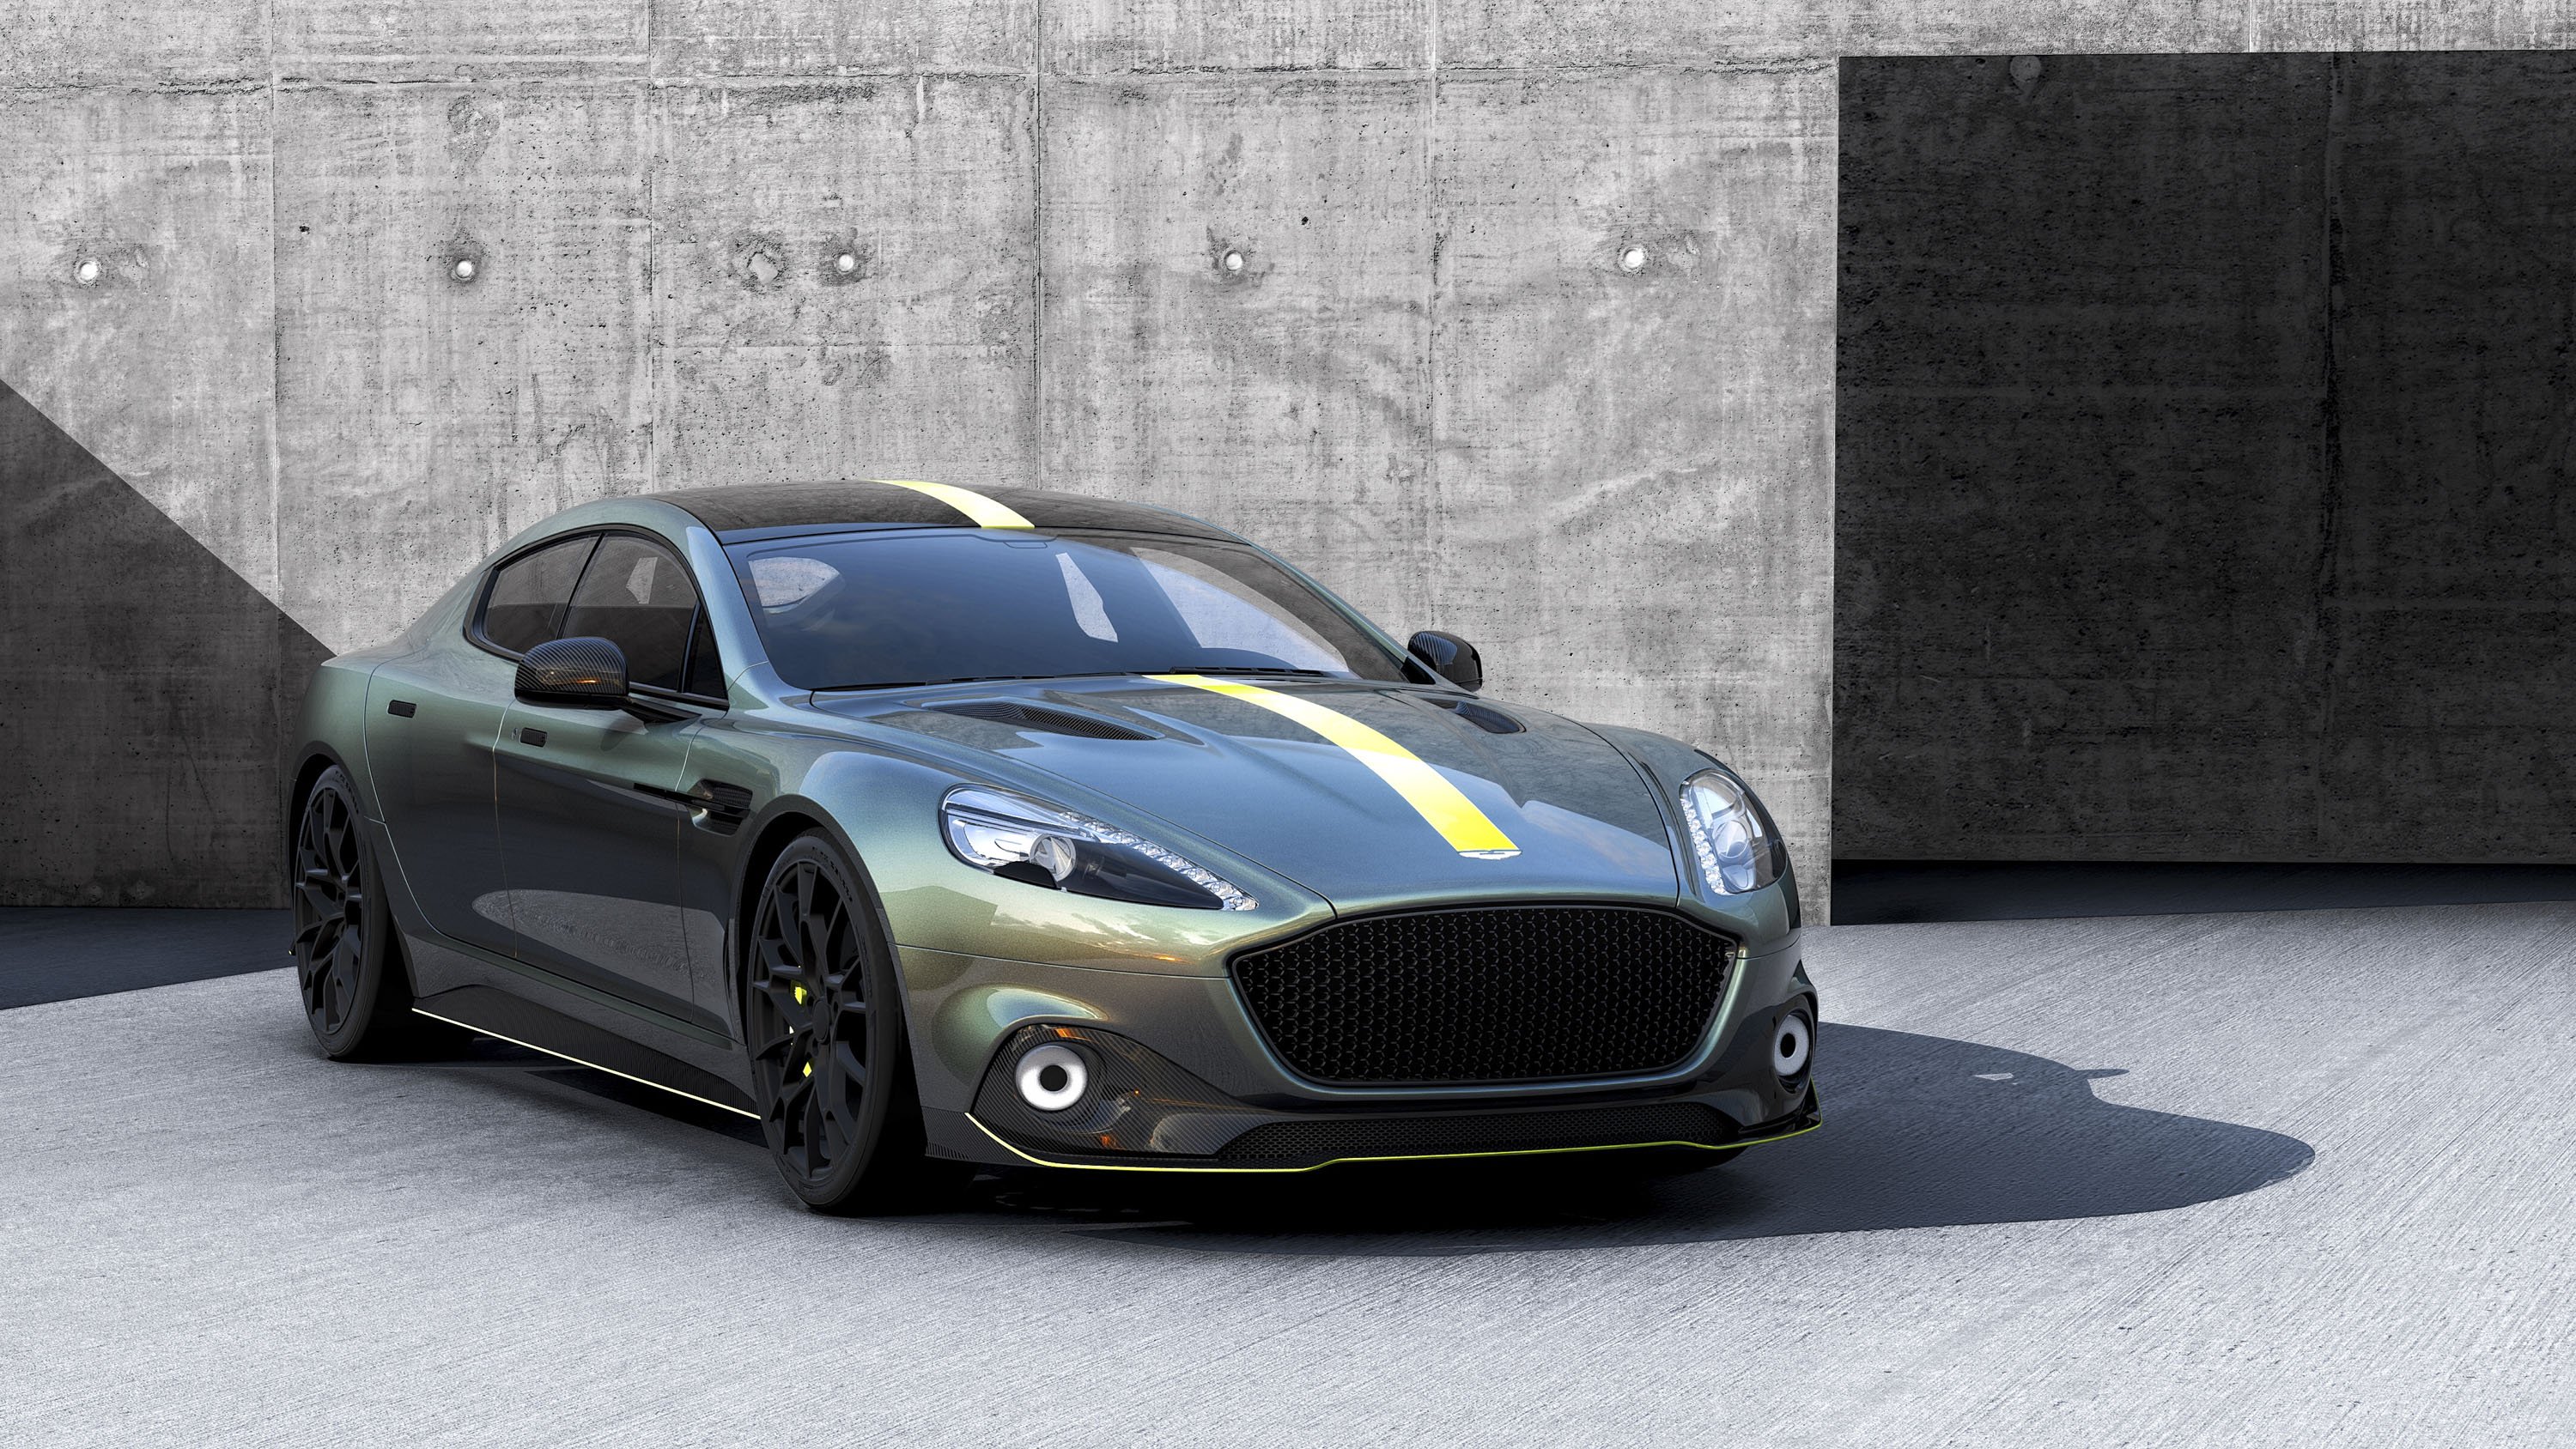 Aston Martin Rapide AMR Concept Picture, Photo